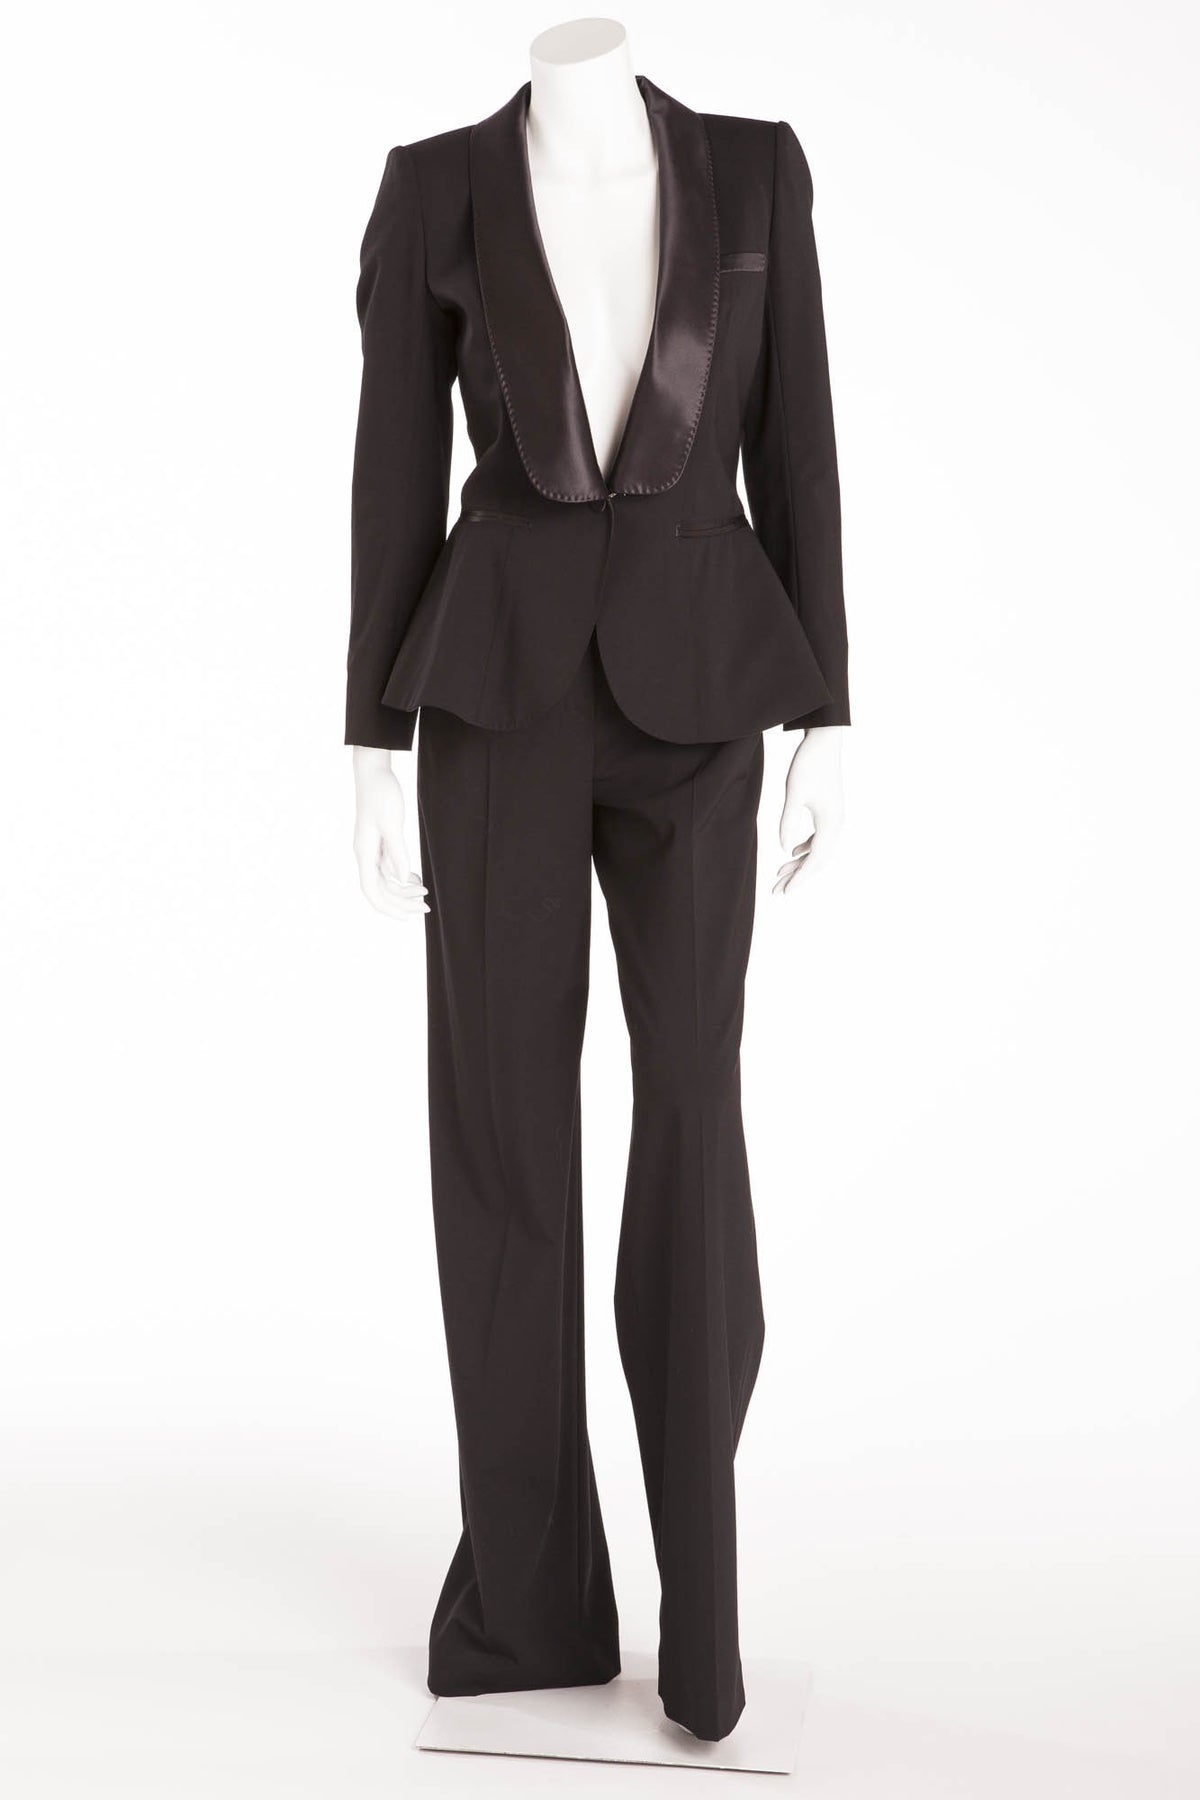 Louis Vuitton - New 2PC Black Blazer & Dress Pants with Satin Trim